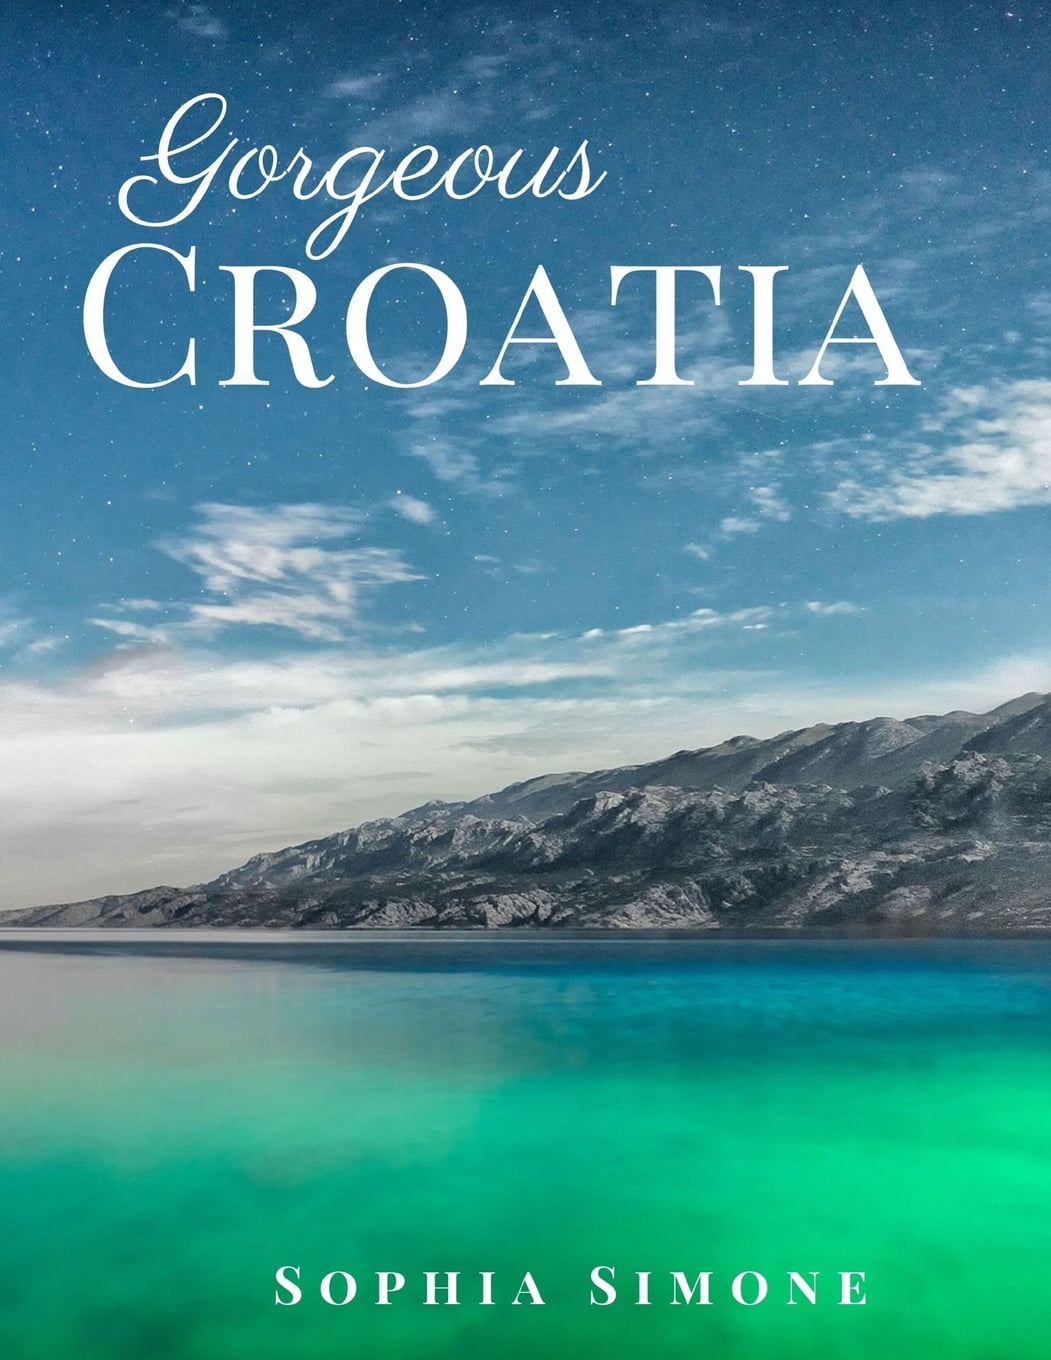 best travel book on croatia